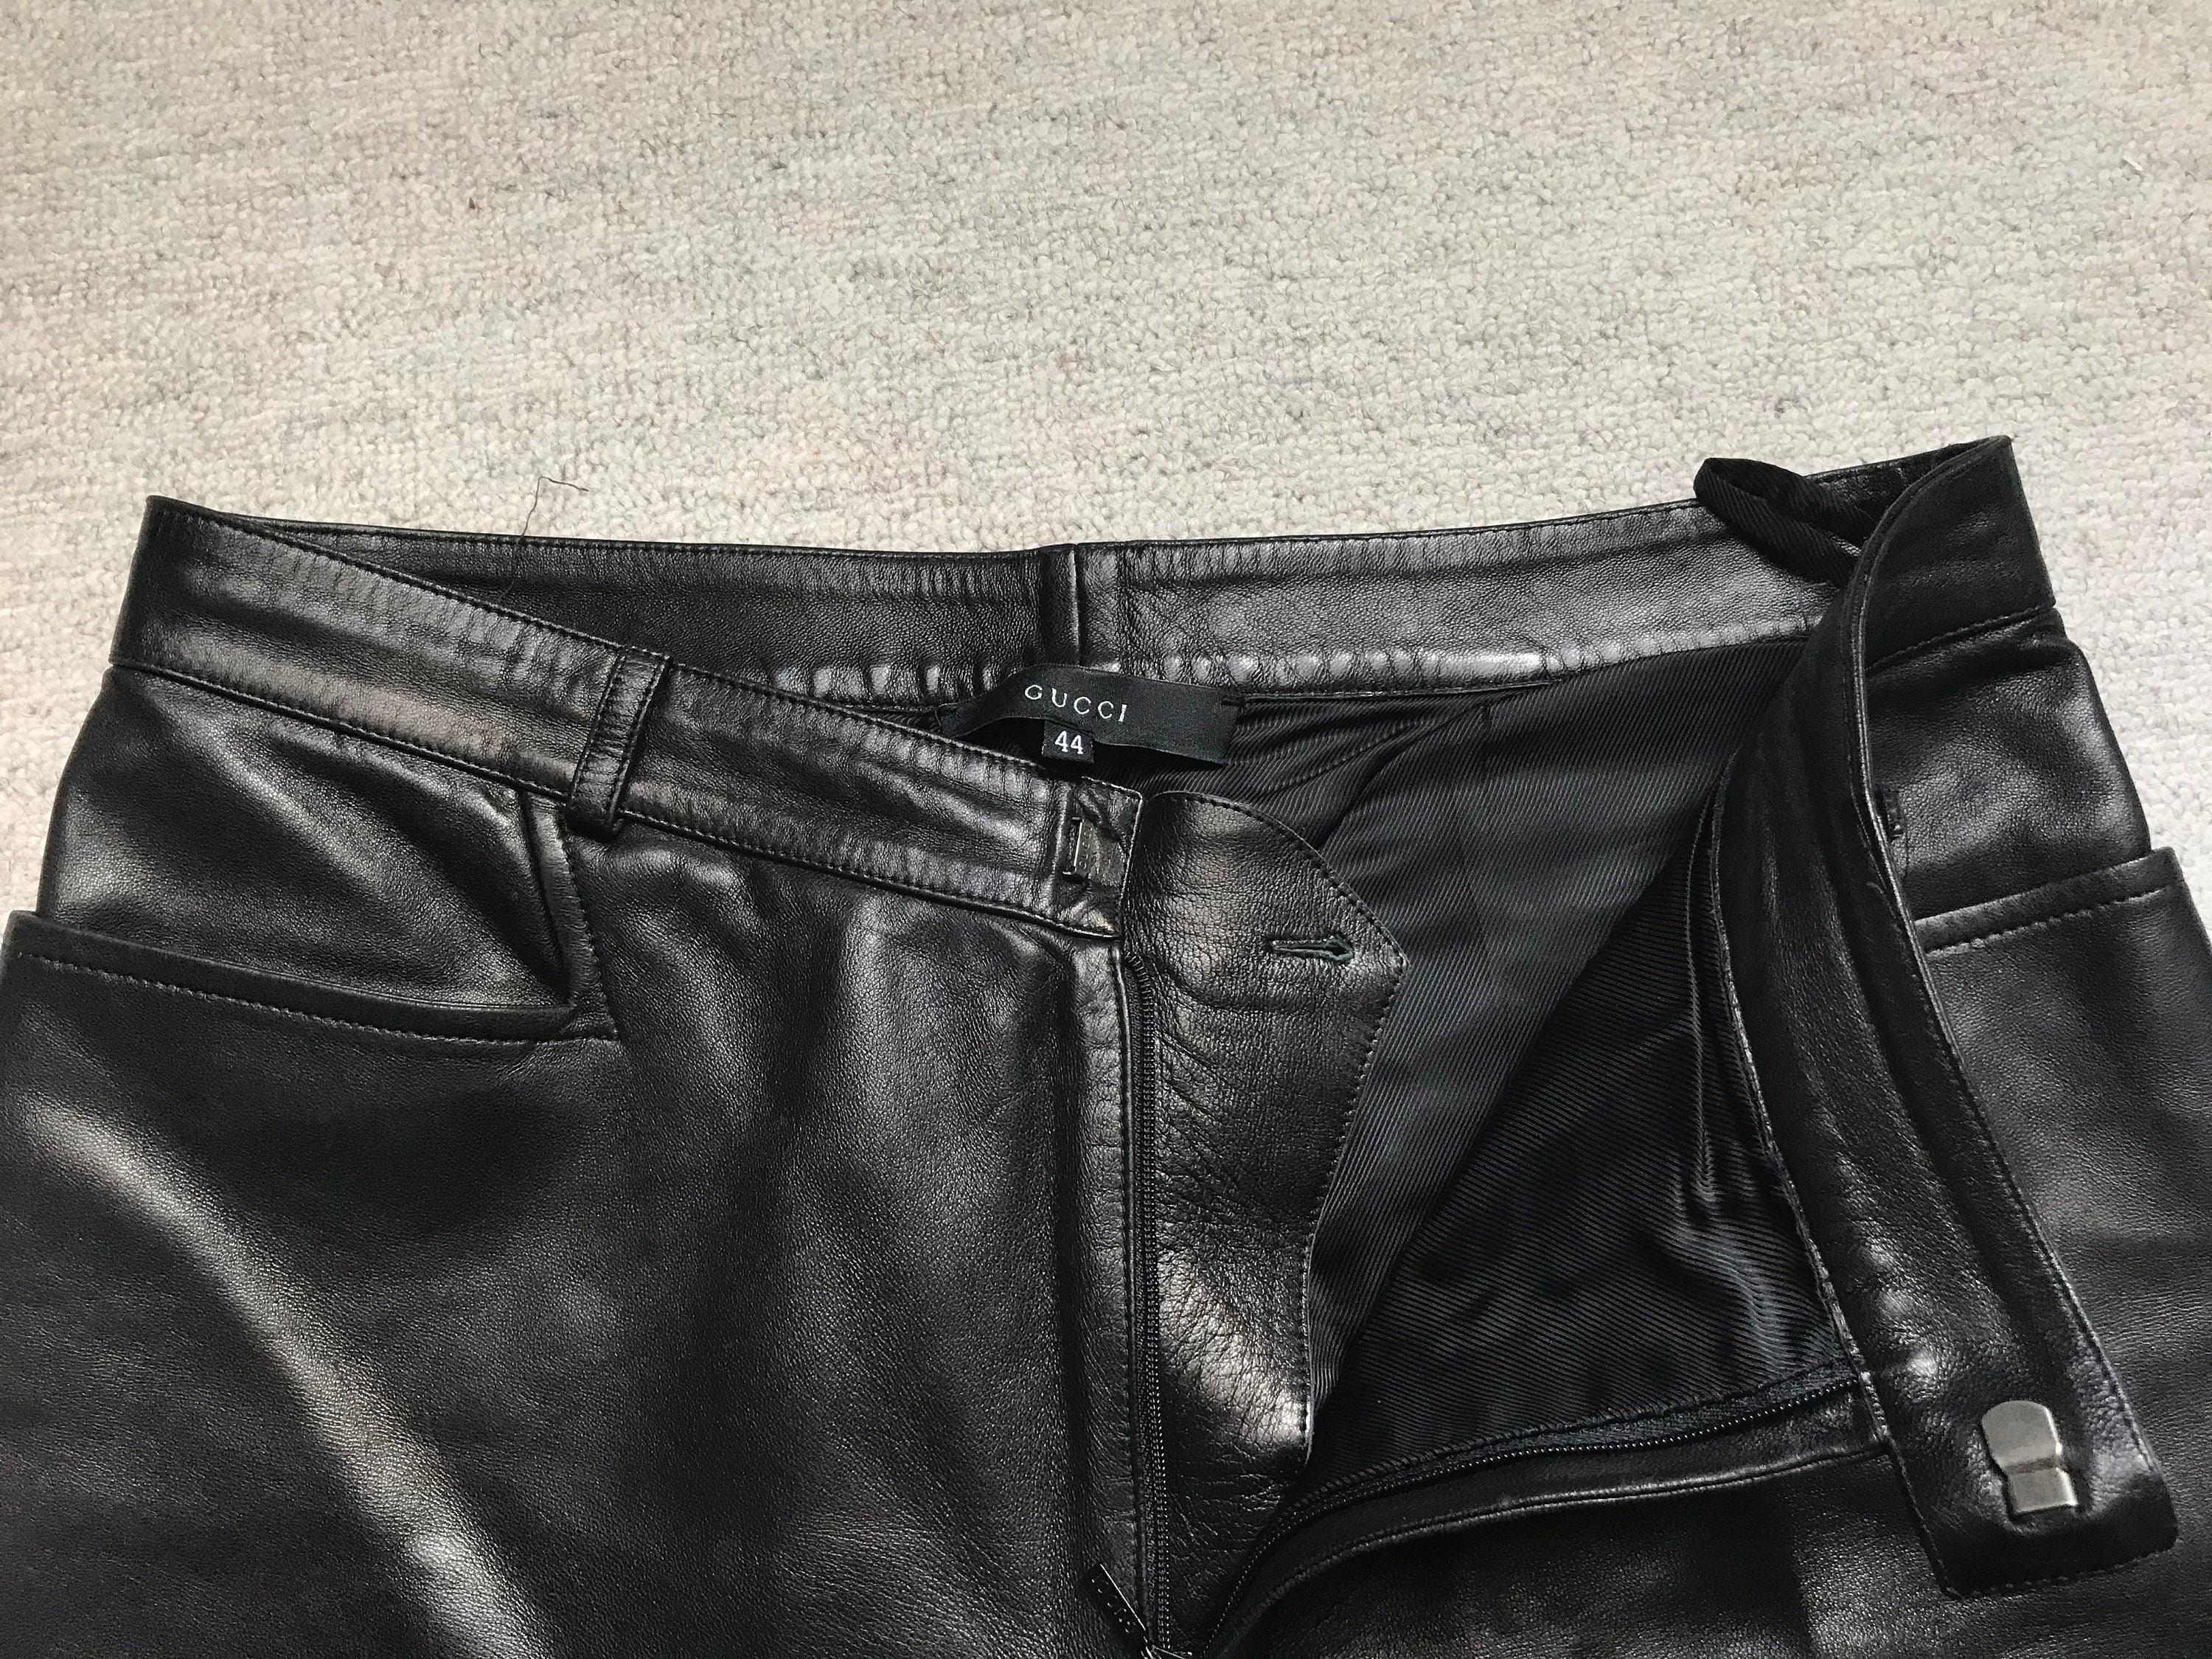 Gucci Leather Pants  Mercari